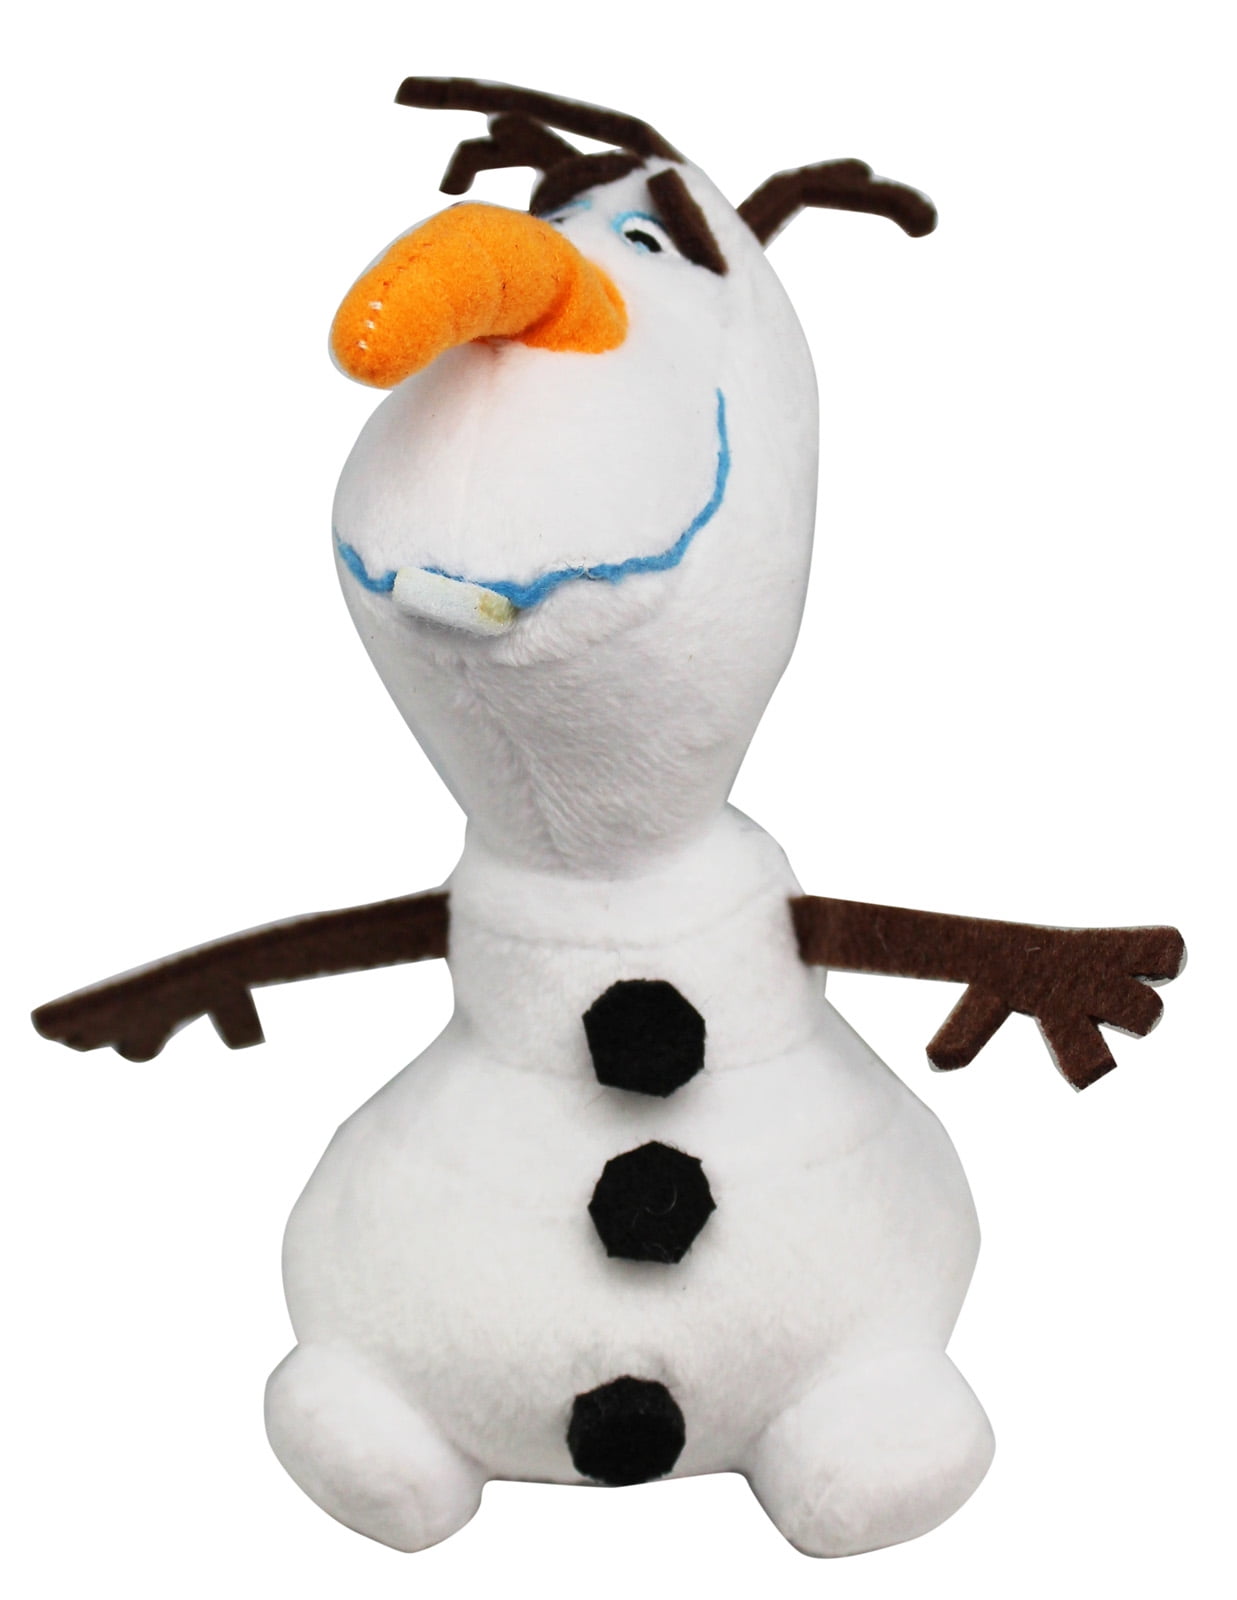 Disney Frozen 2 II Movie Olaf Plush Doll Figure Snowman Snowflakes 2019 12" for sale online 